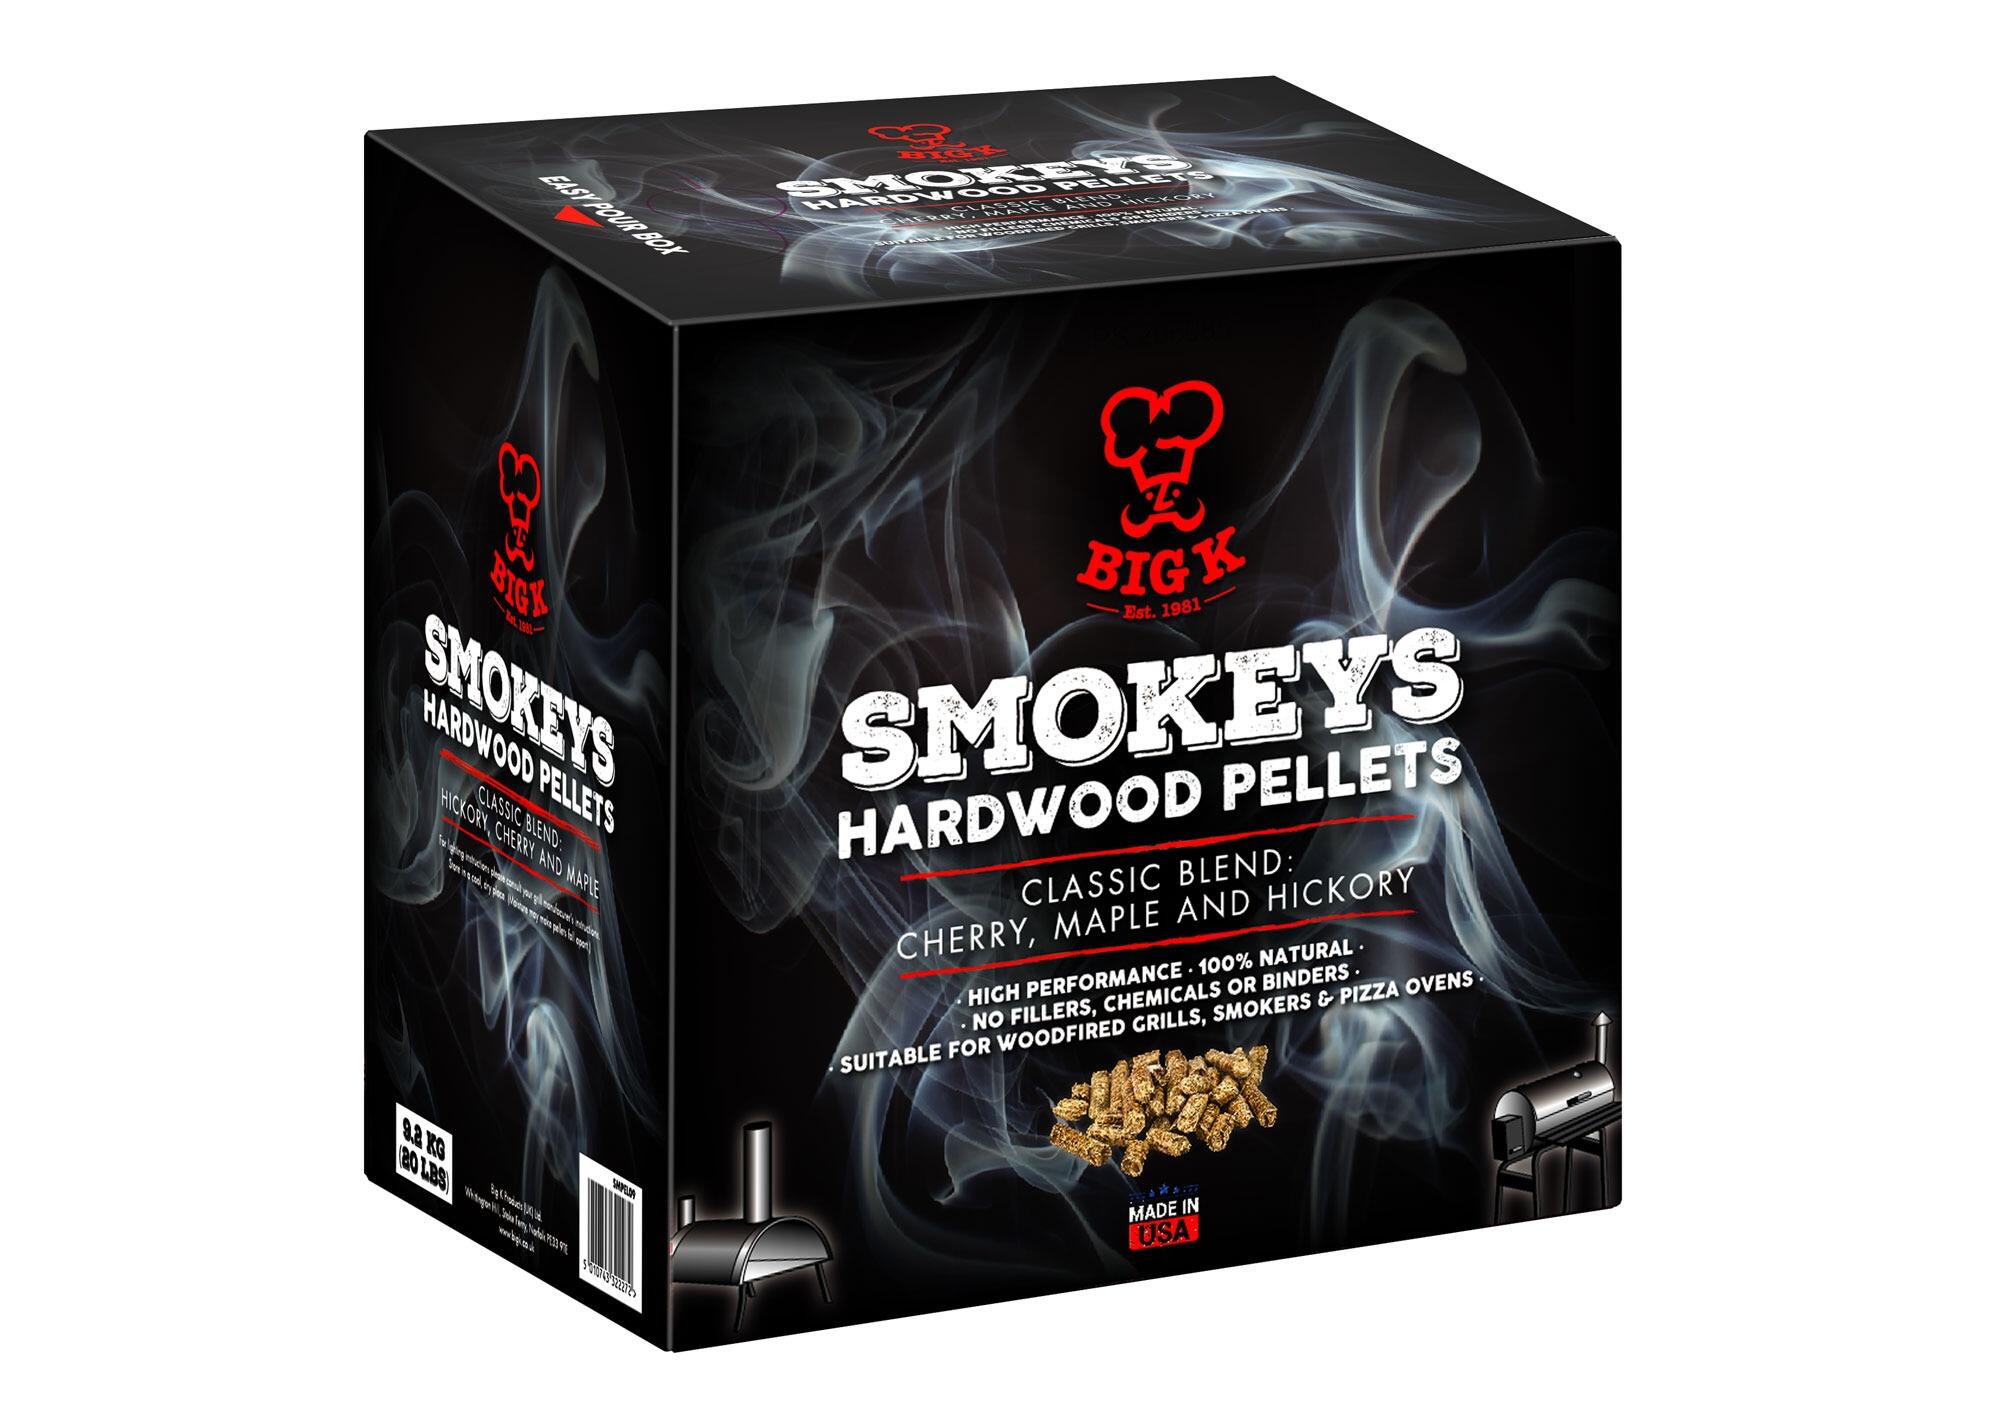 Smokeys Hardwood Pellets